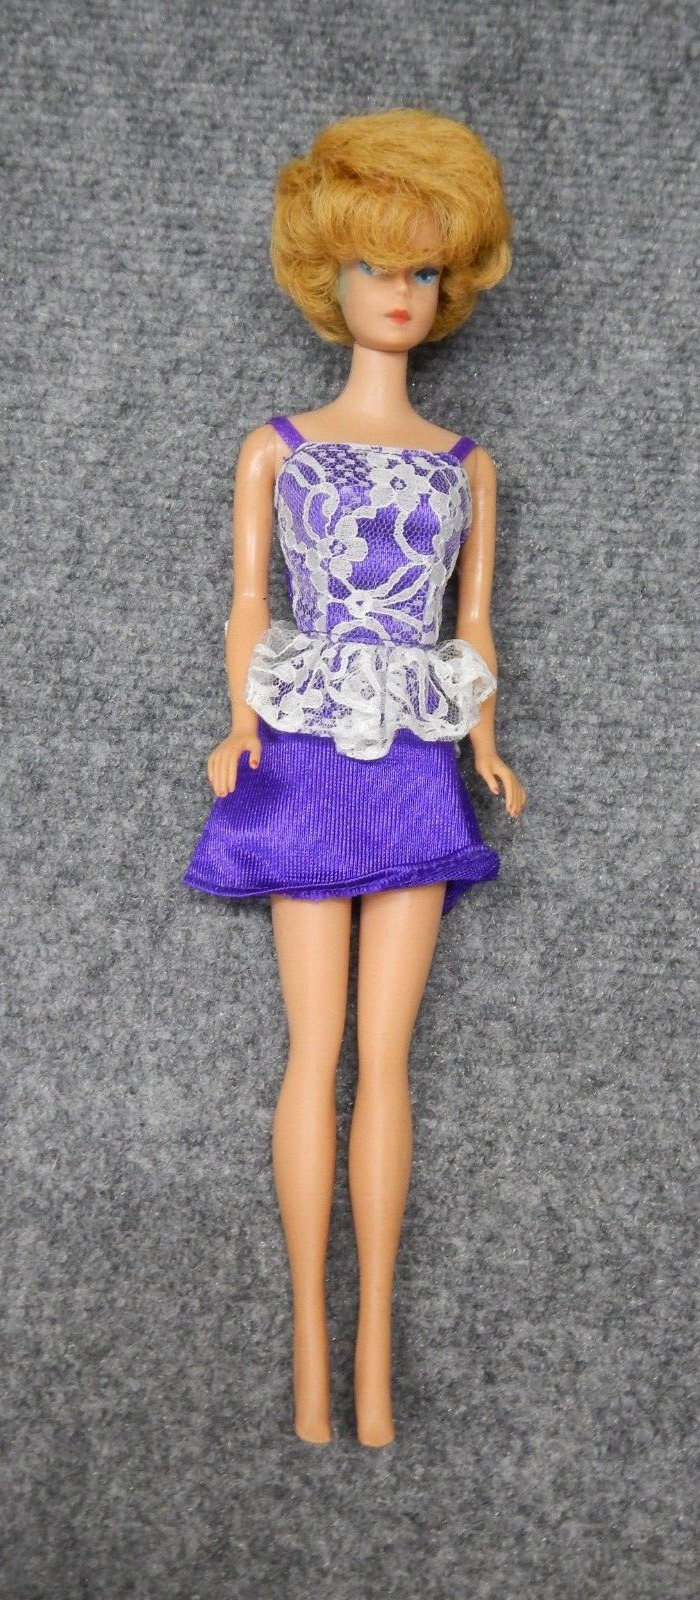 Vintage 1964-1965 Mattel Blonde Hair Bubblecut Barbie Doll,#850 Minor Wear See